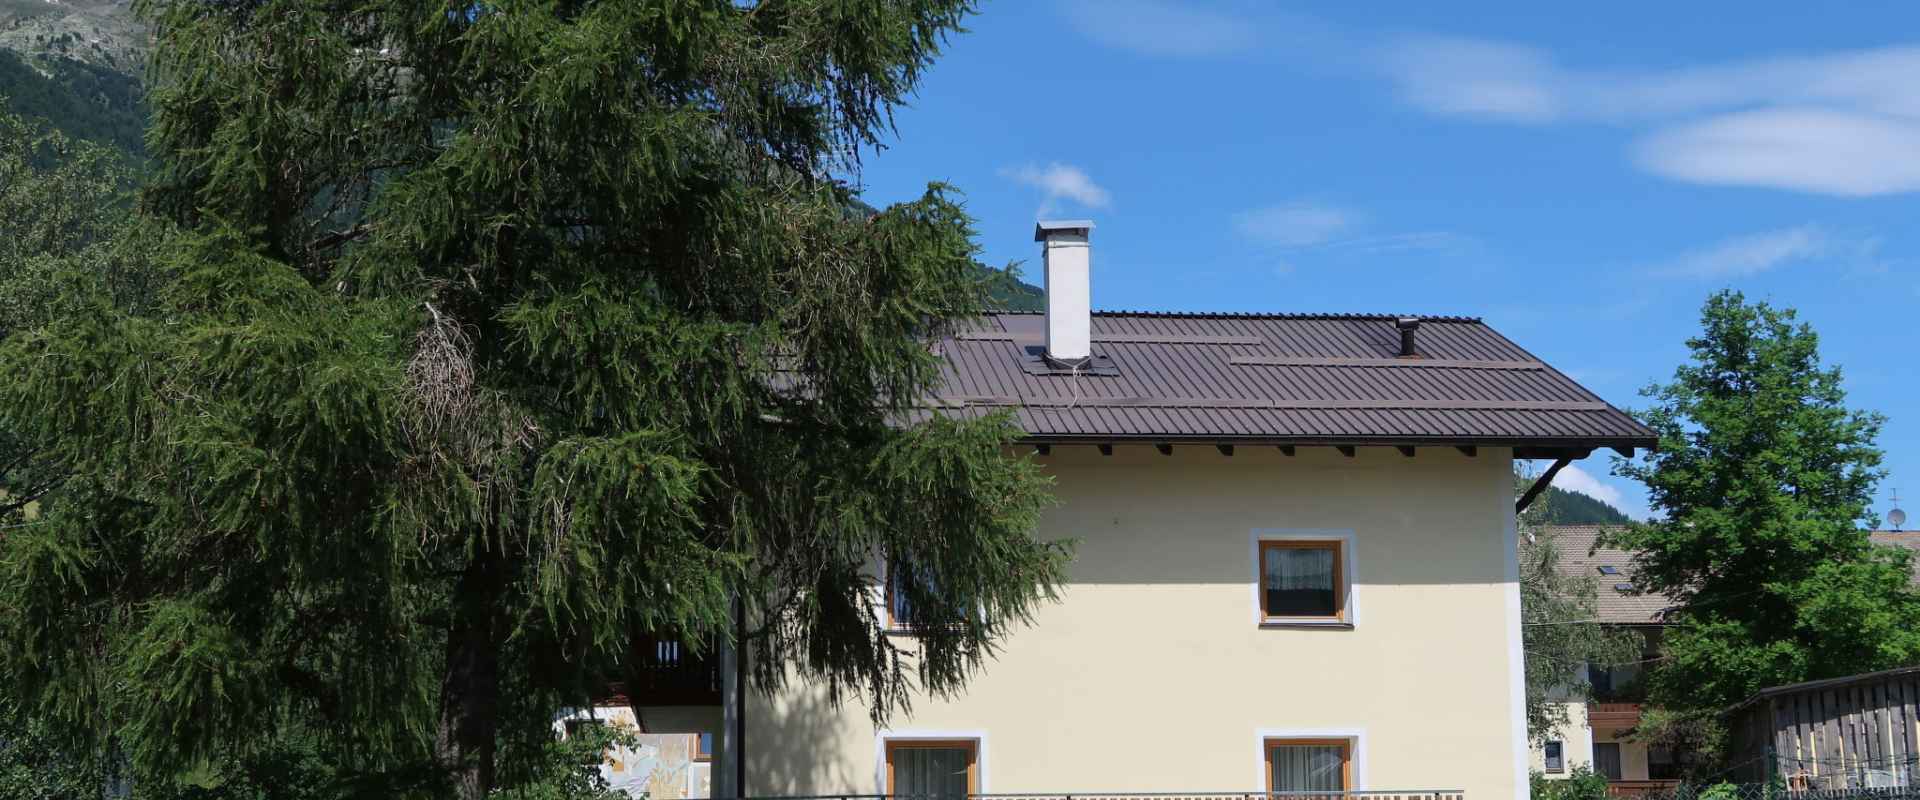 Nebenhaus schonblick (svh111)